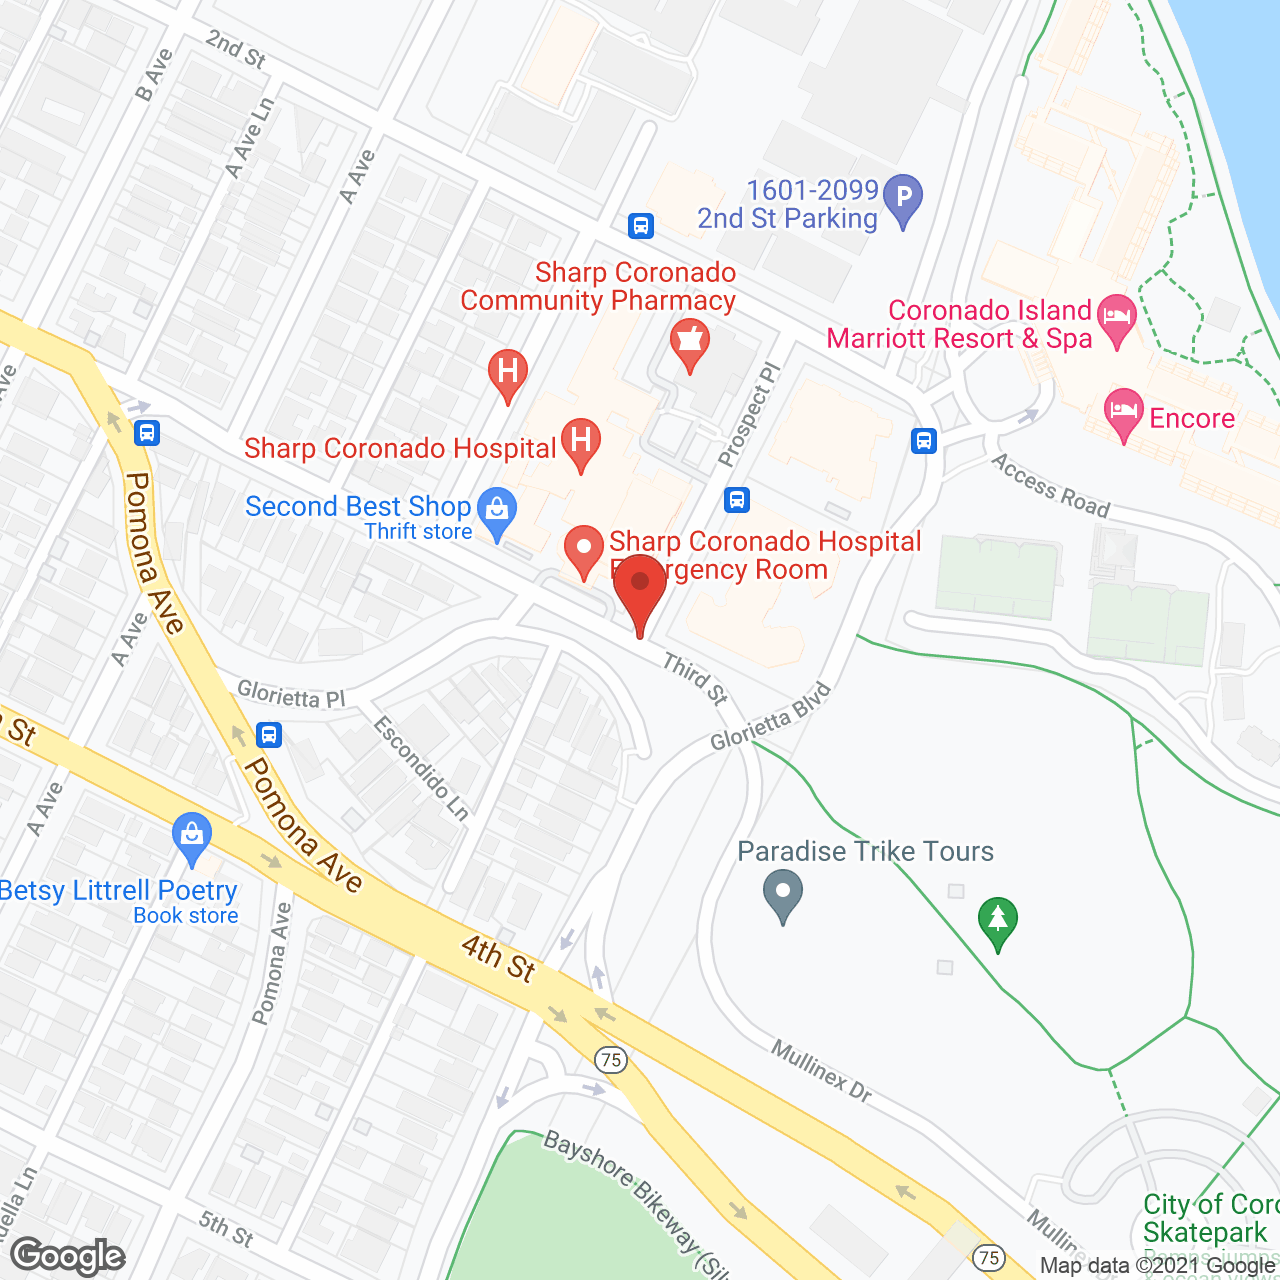 Coronado Retirement Village in google map